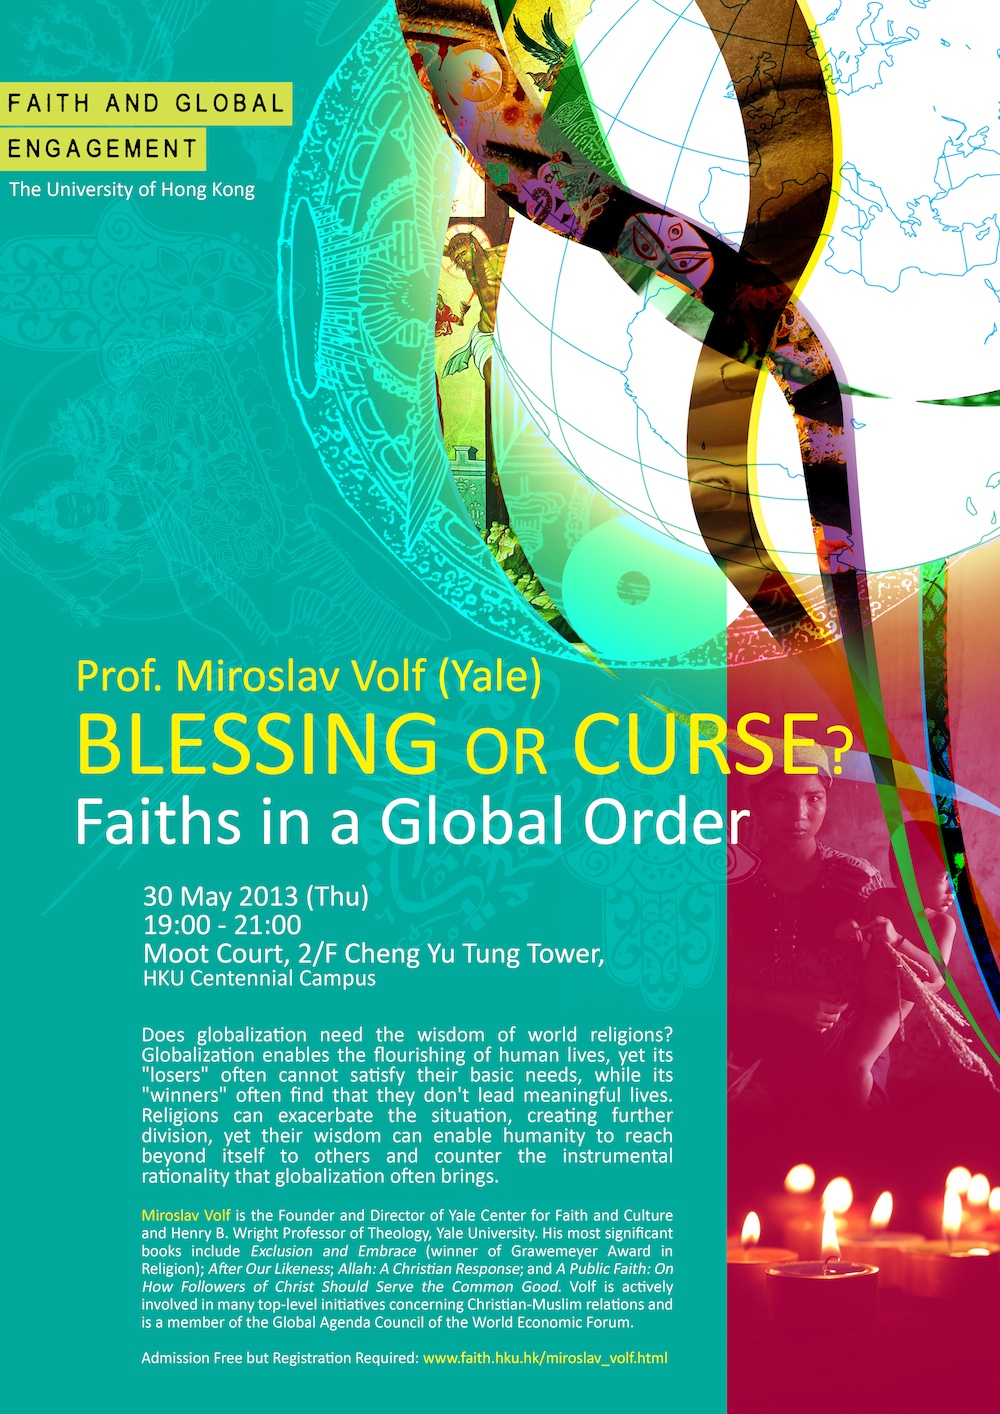 Prof. Miroslav Volf (Yale): Blessing or Curse? Faiths in a Global Order